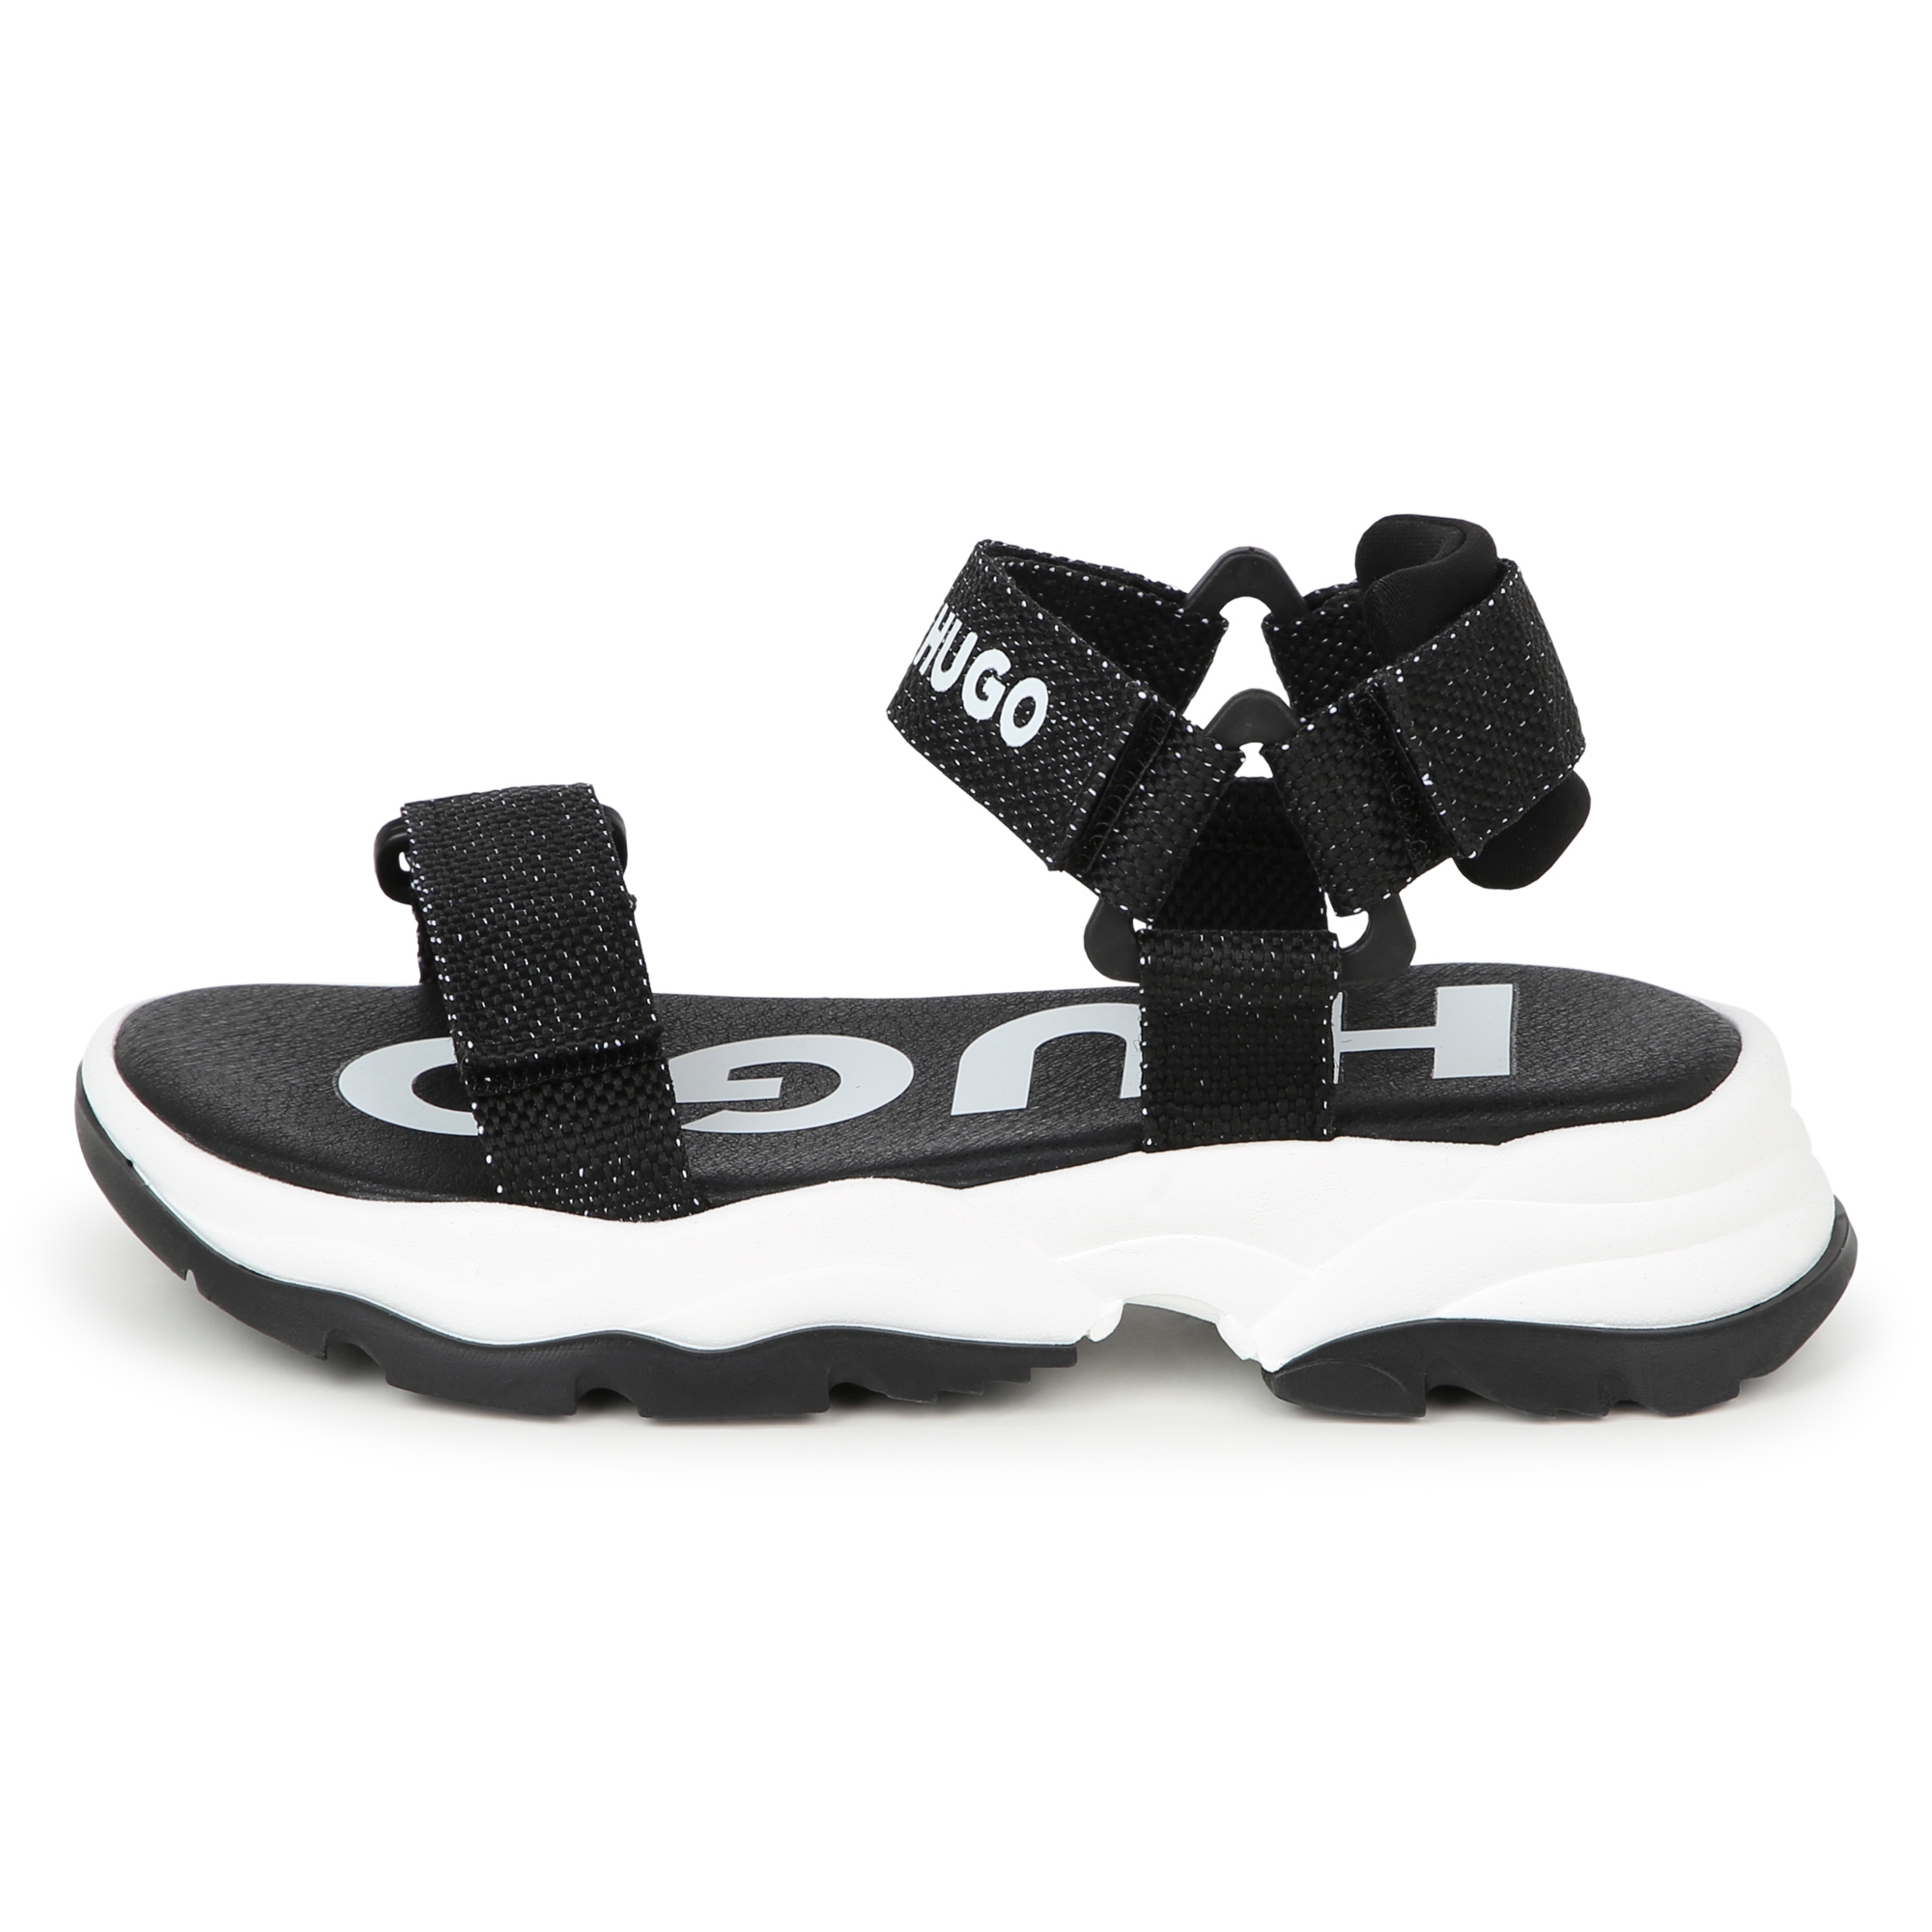 Sports sandals HUGO for GIRL